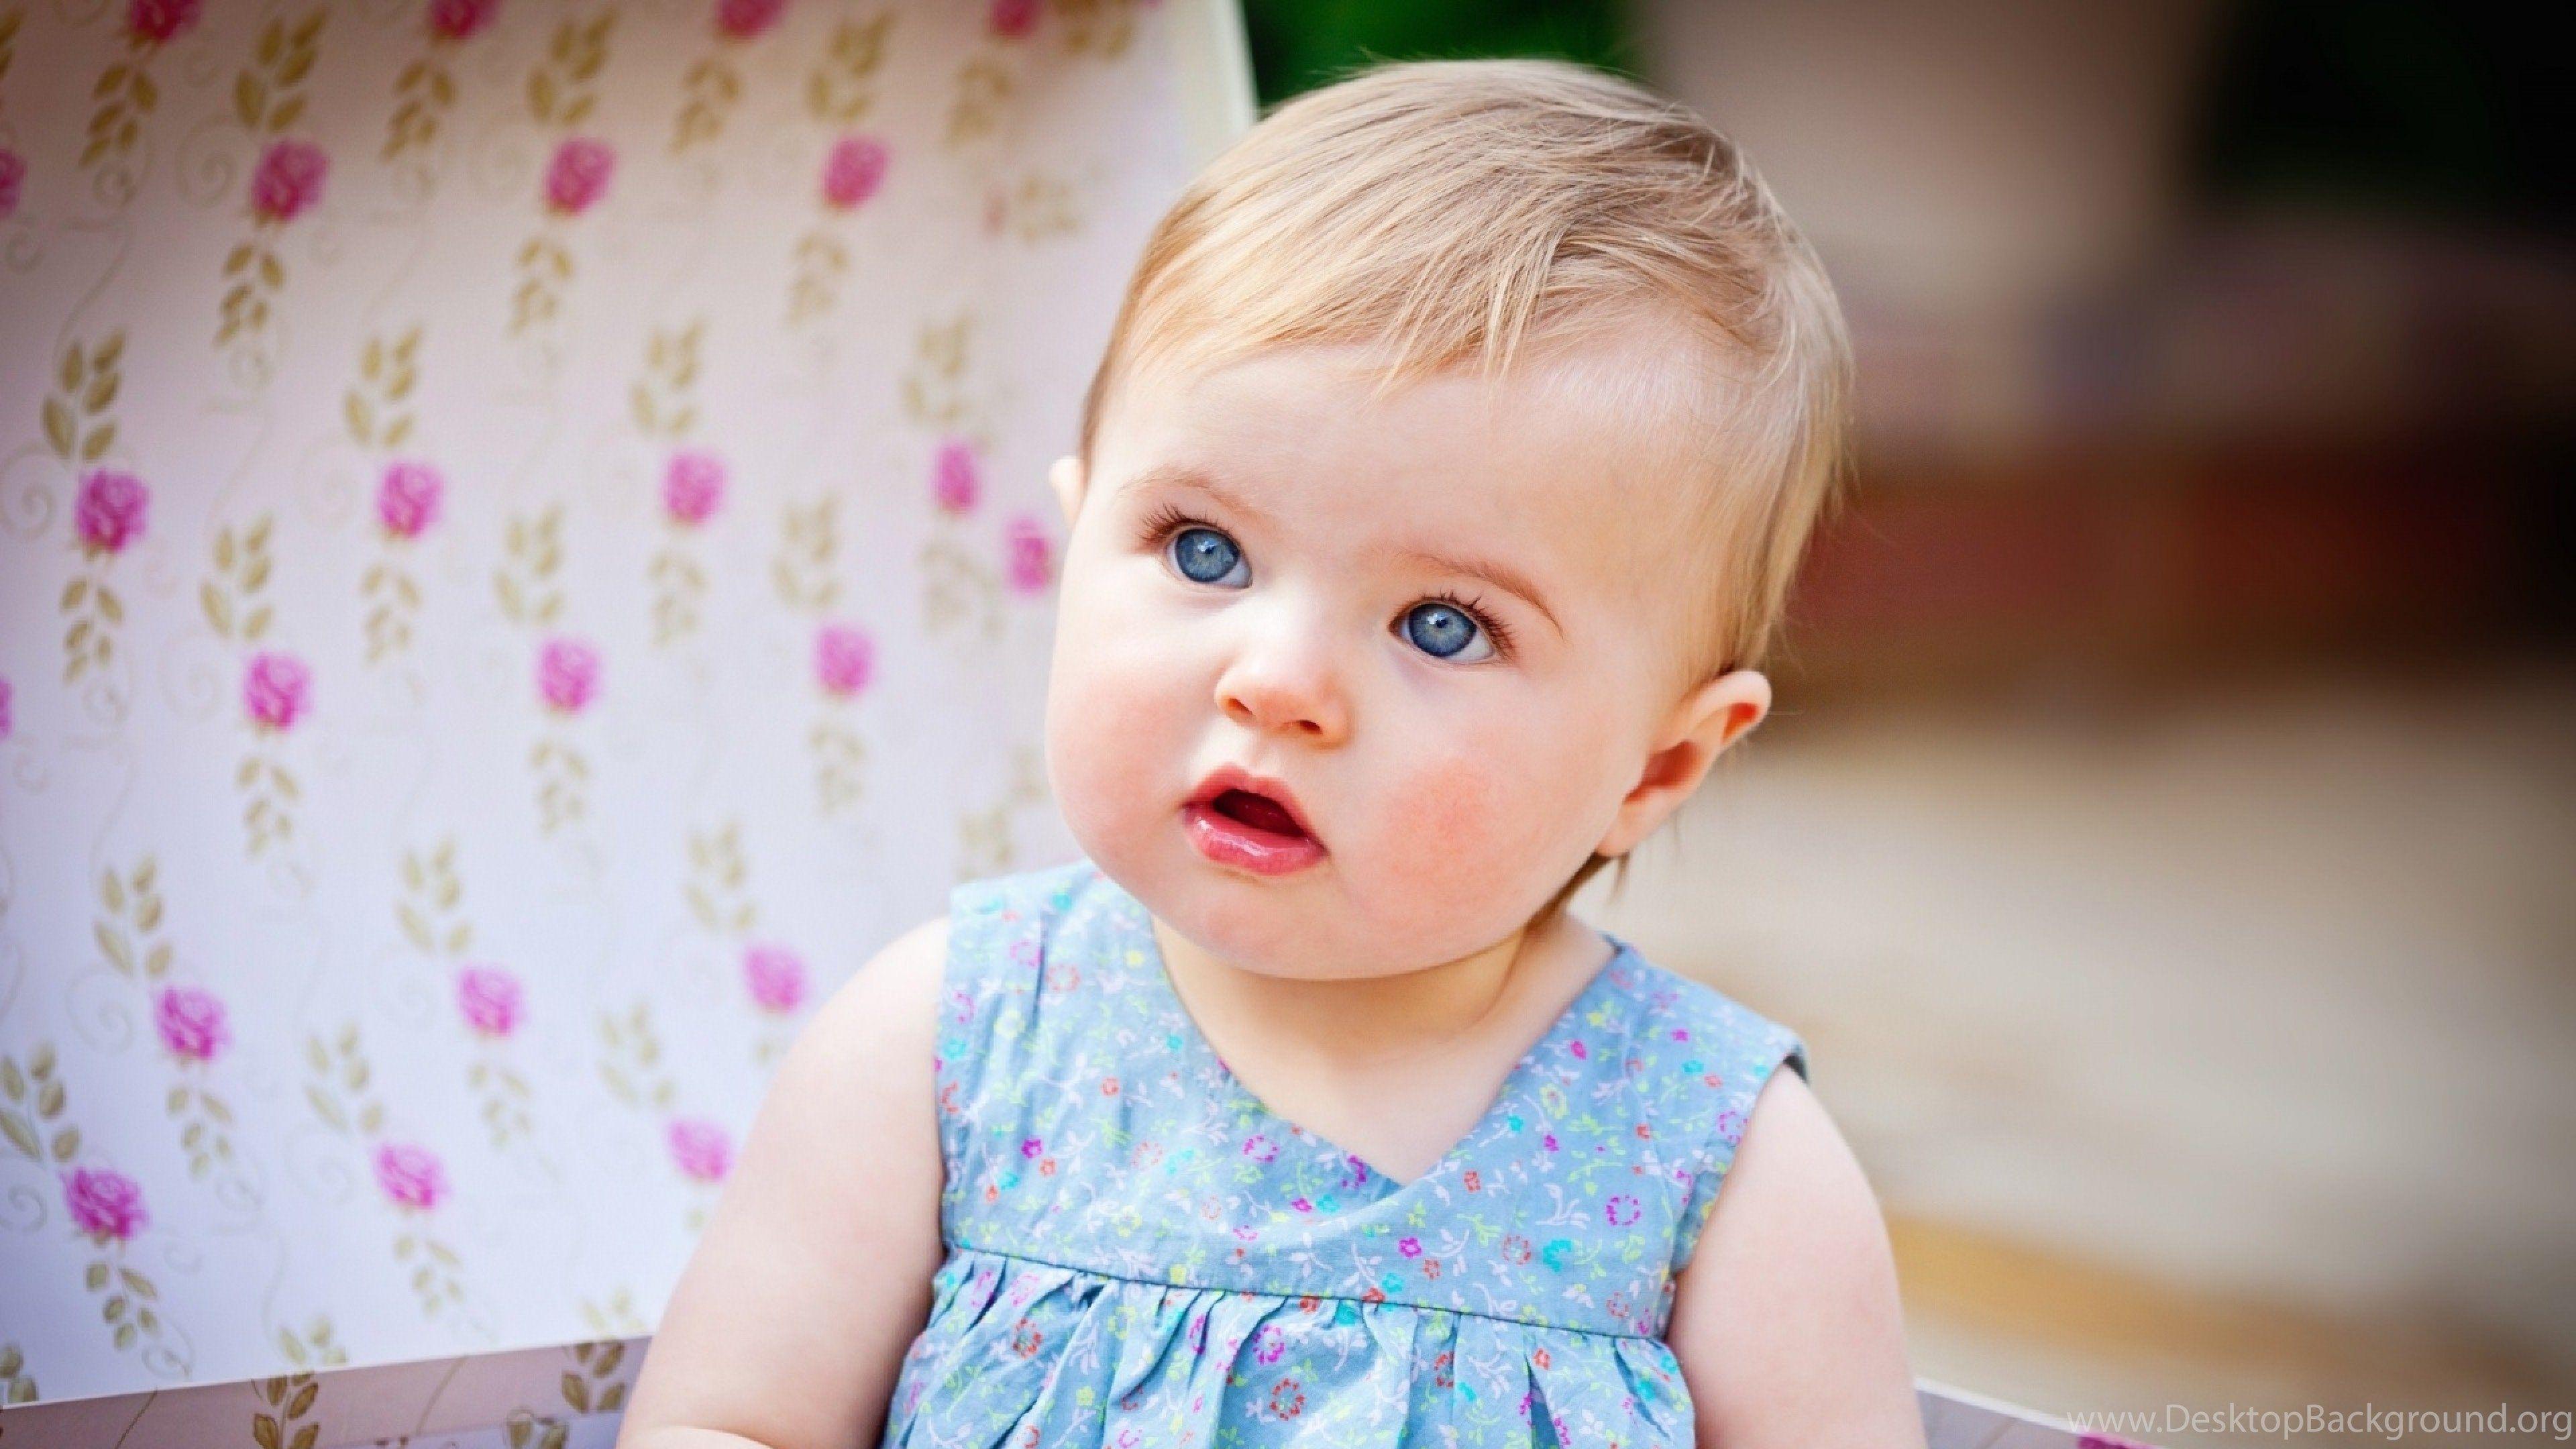 Wallpaper Cute Baby Girl With Beautiful Blue Eye Wallpaper